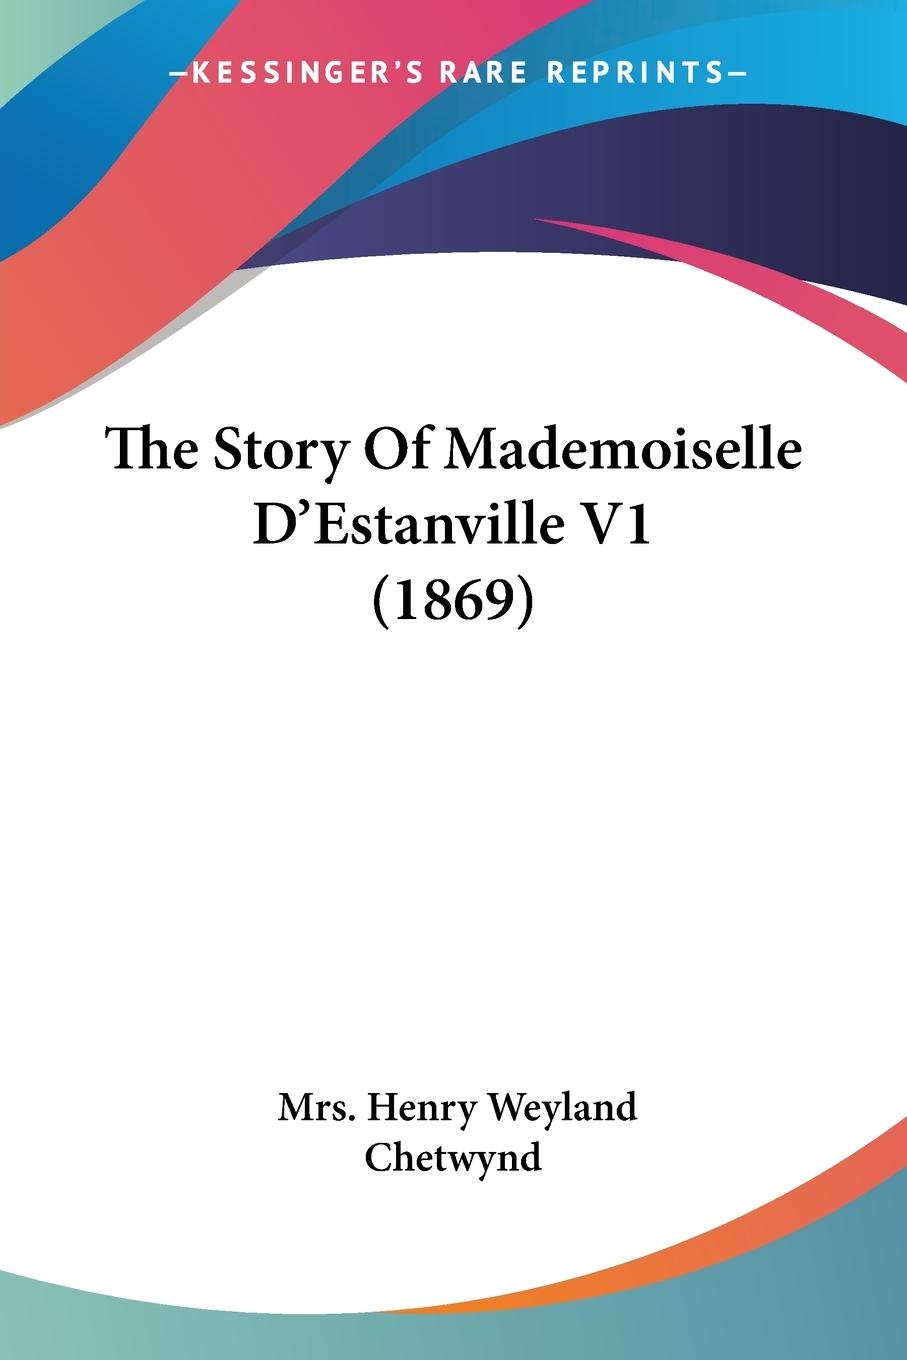 The Story Of Mademoiselle D Estanville V1 (1869) - Chetwynd, Henry Weyland